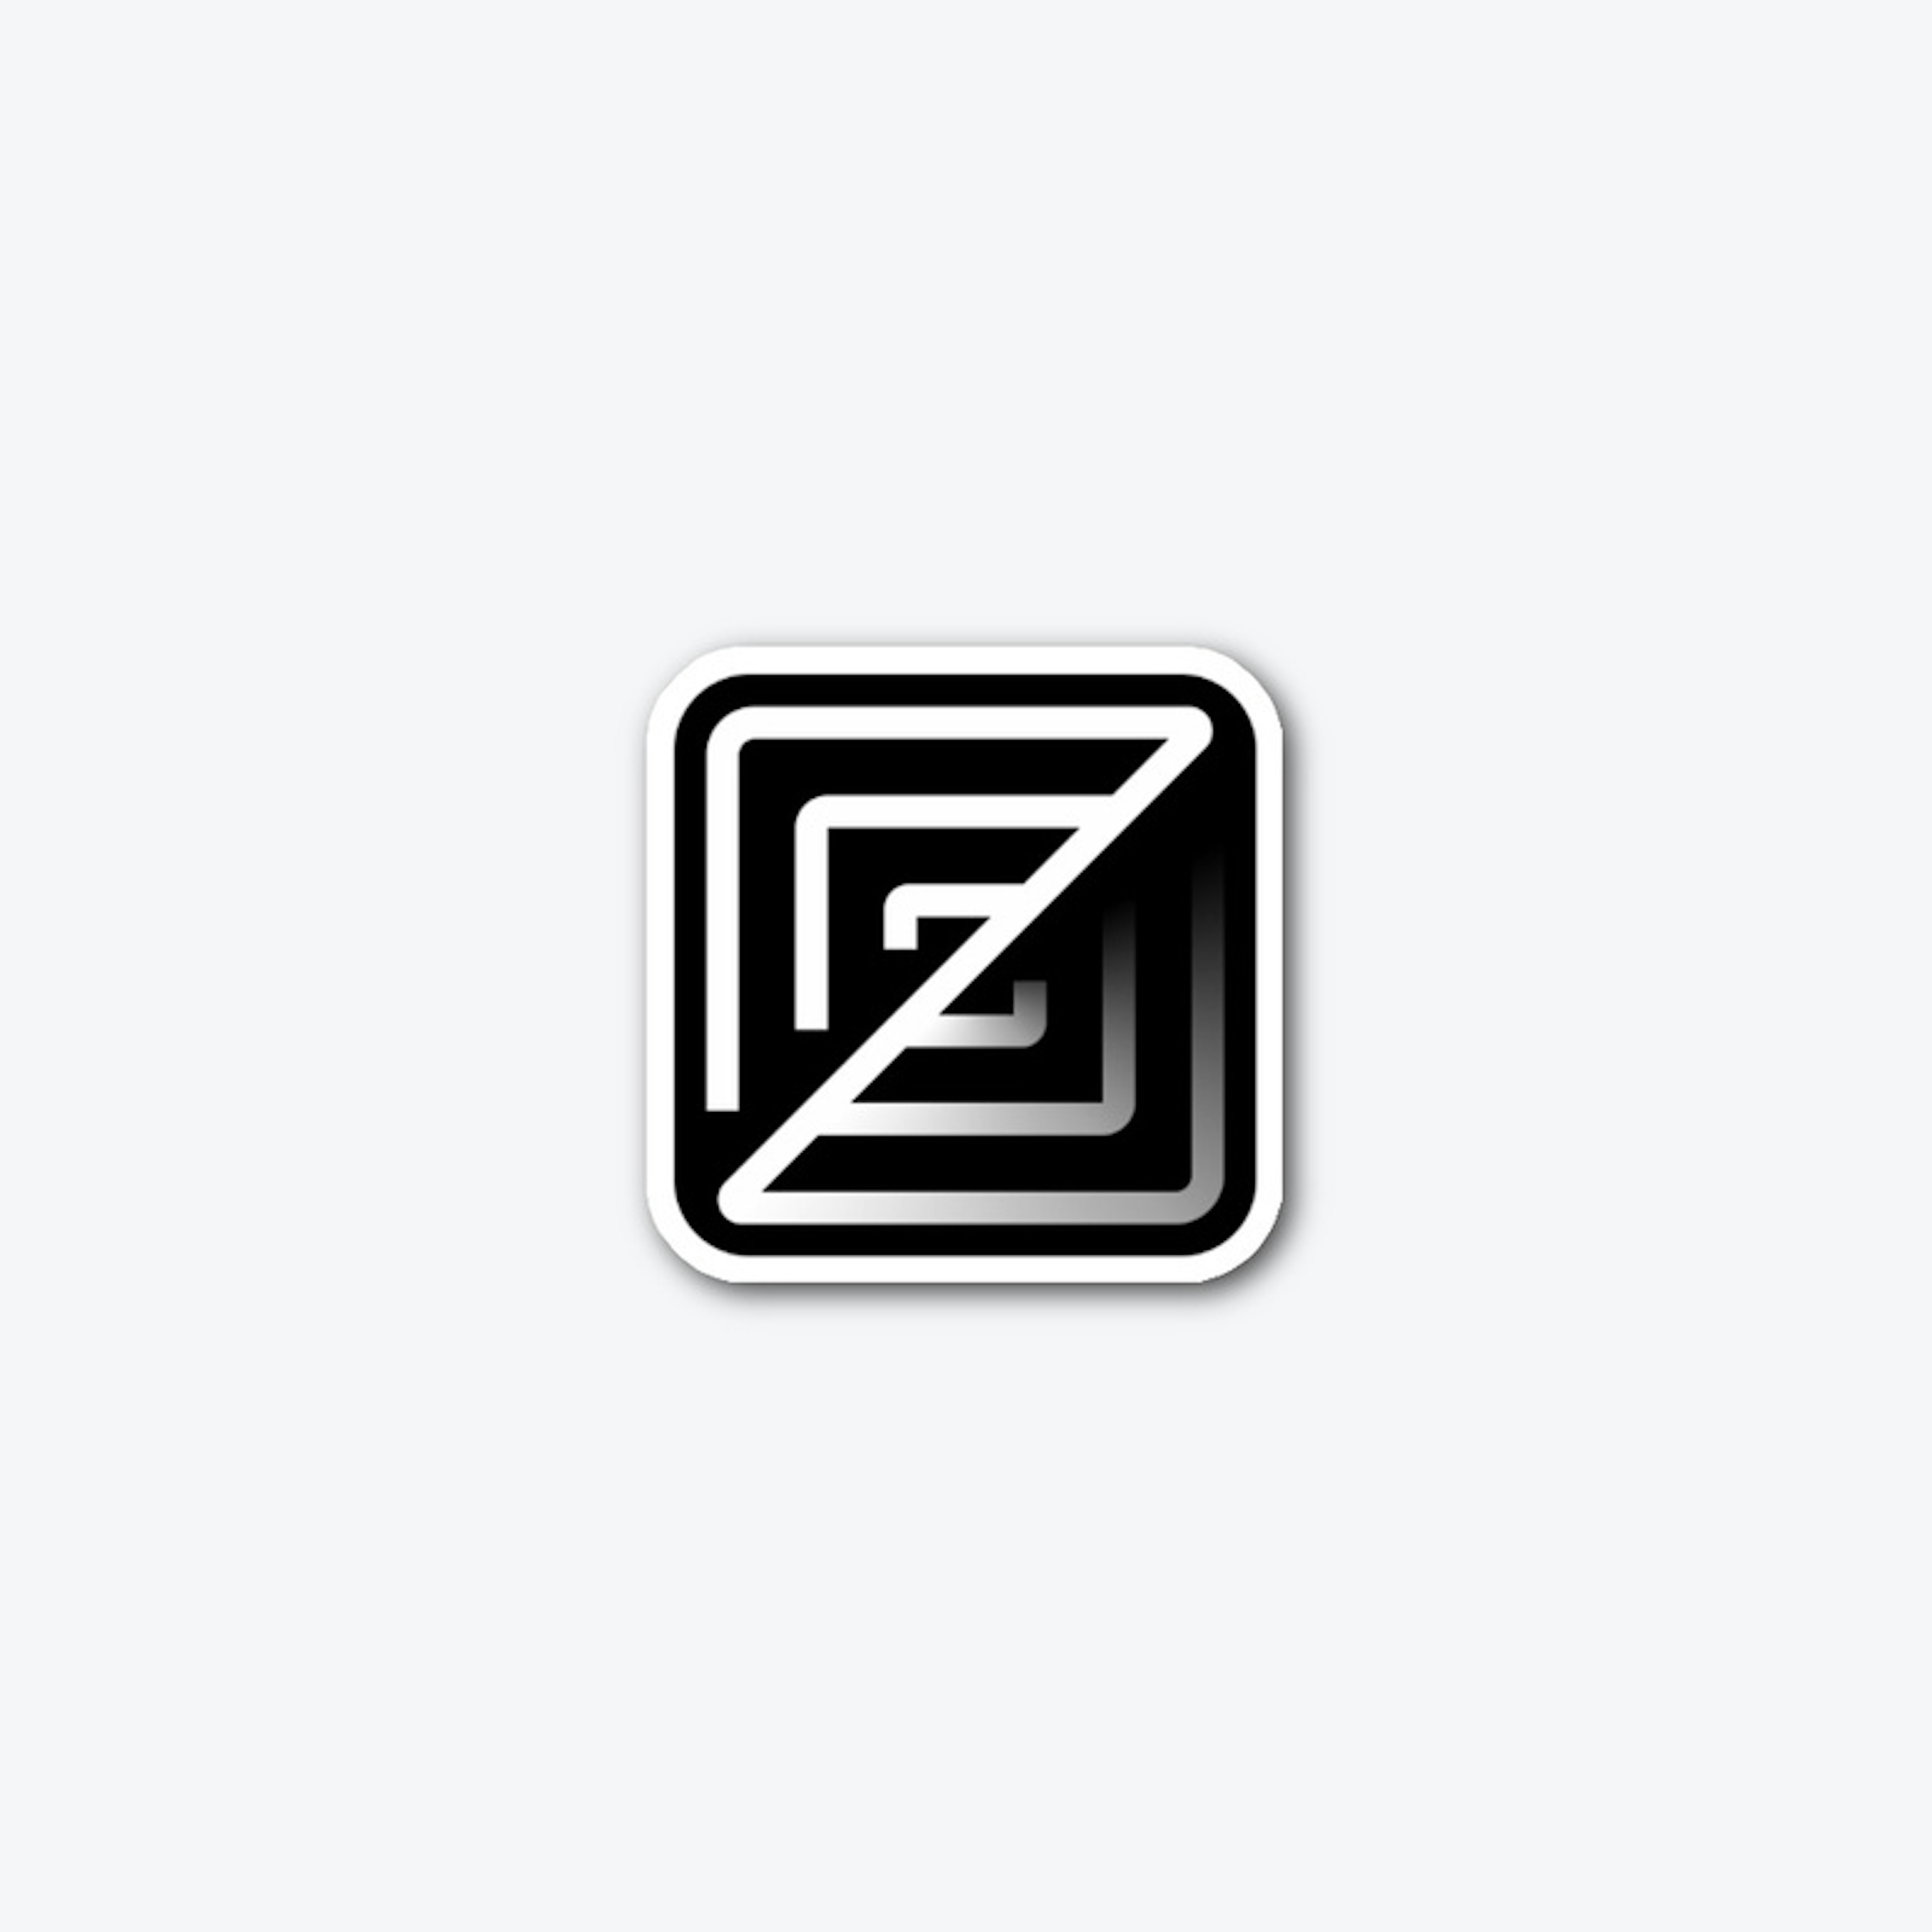 Zed Logo White Sticker